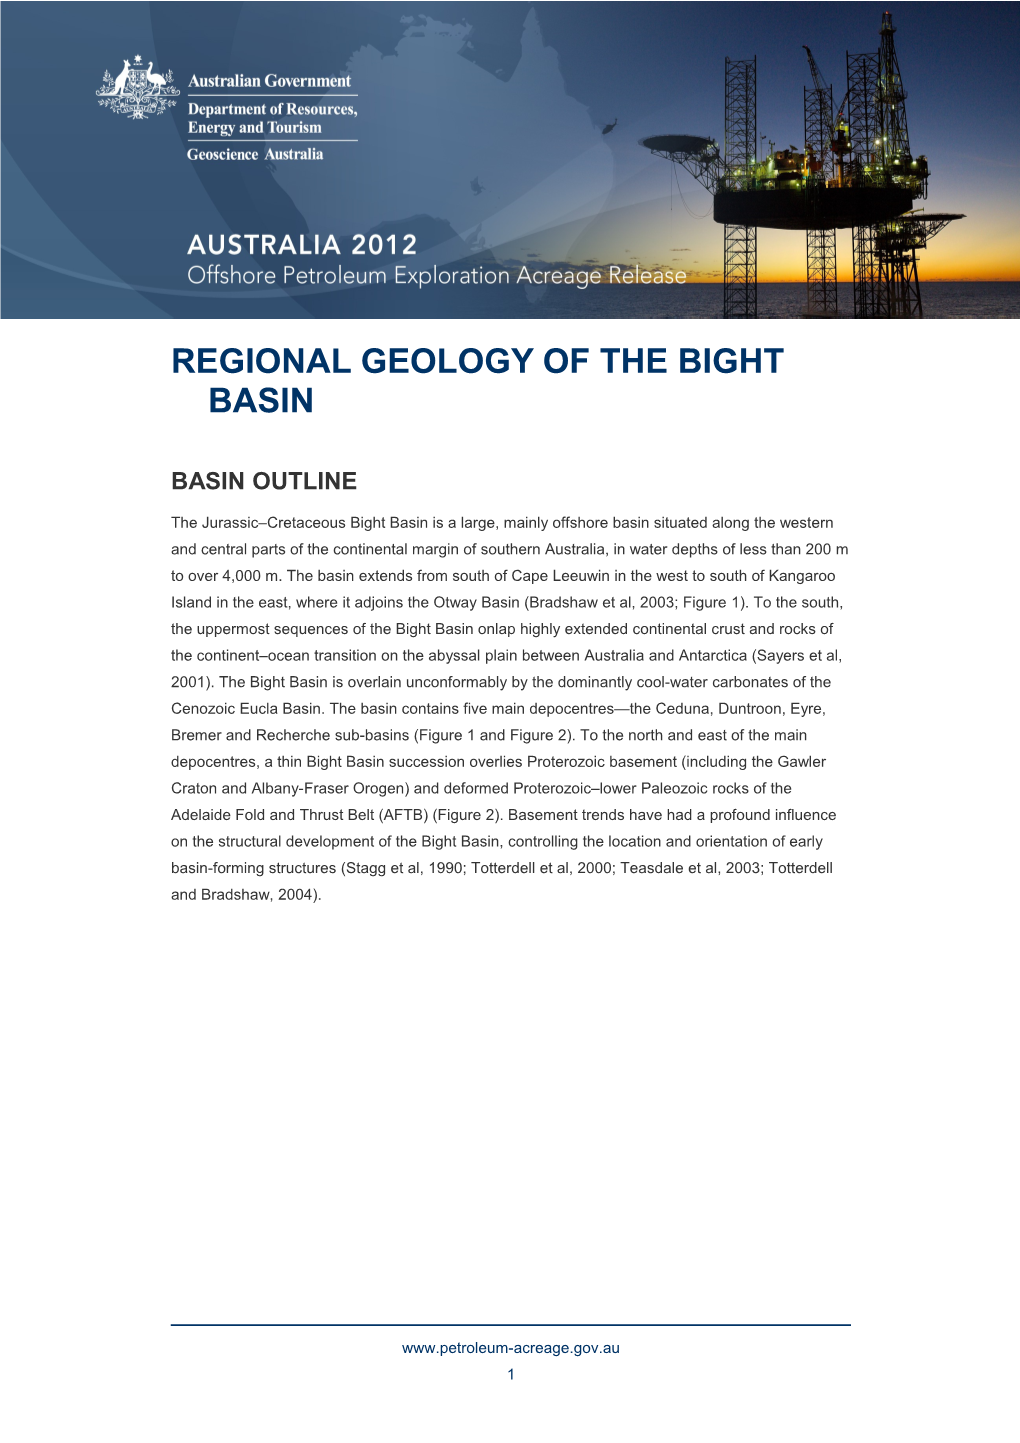 Regional Geology of the Bight Basin